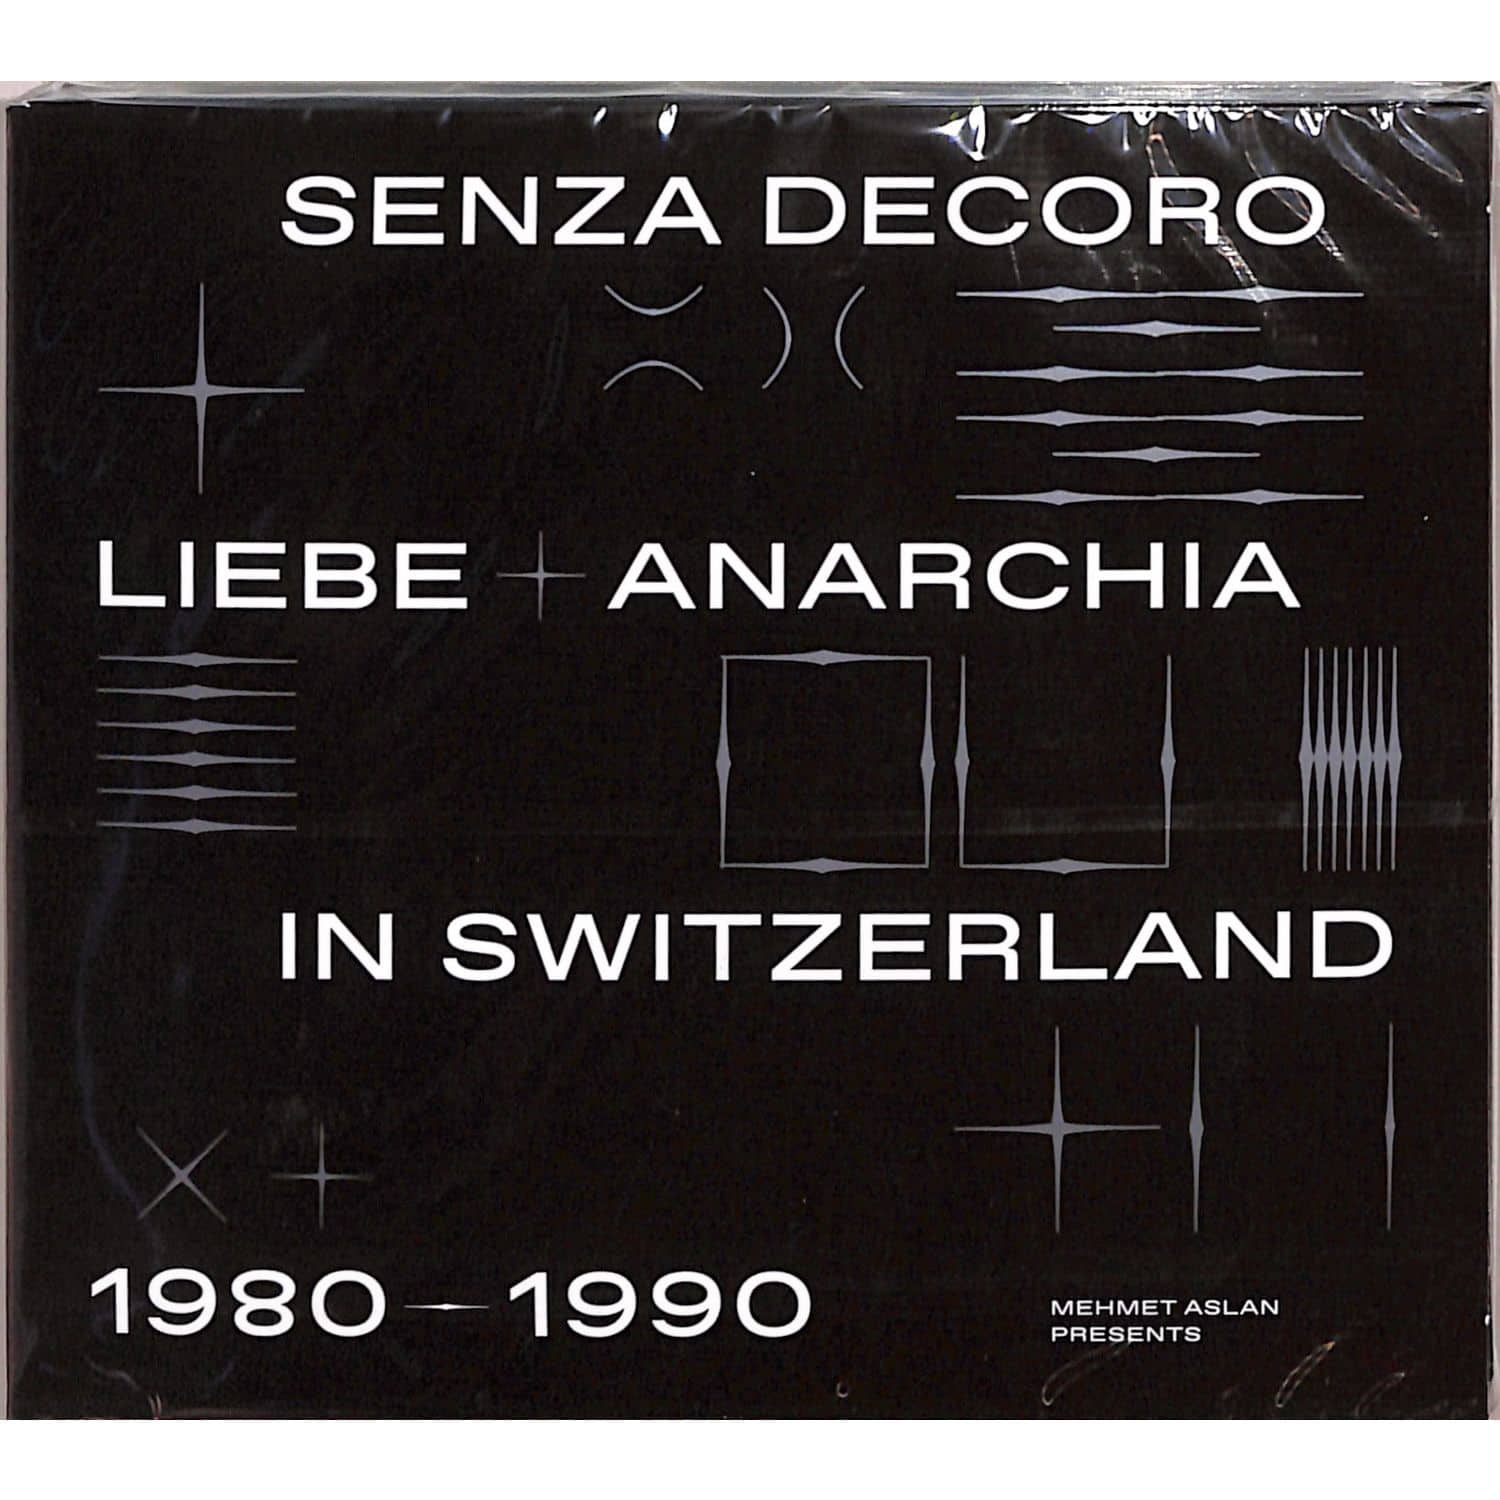 Various / Mehmet Aslan Presents - SENZA DECORO: LIEBE + ANARCHIA IN SWITZERLAND 1980 